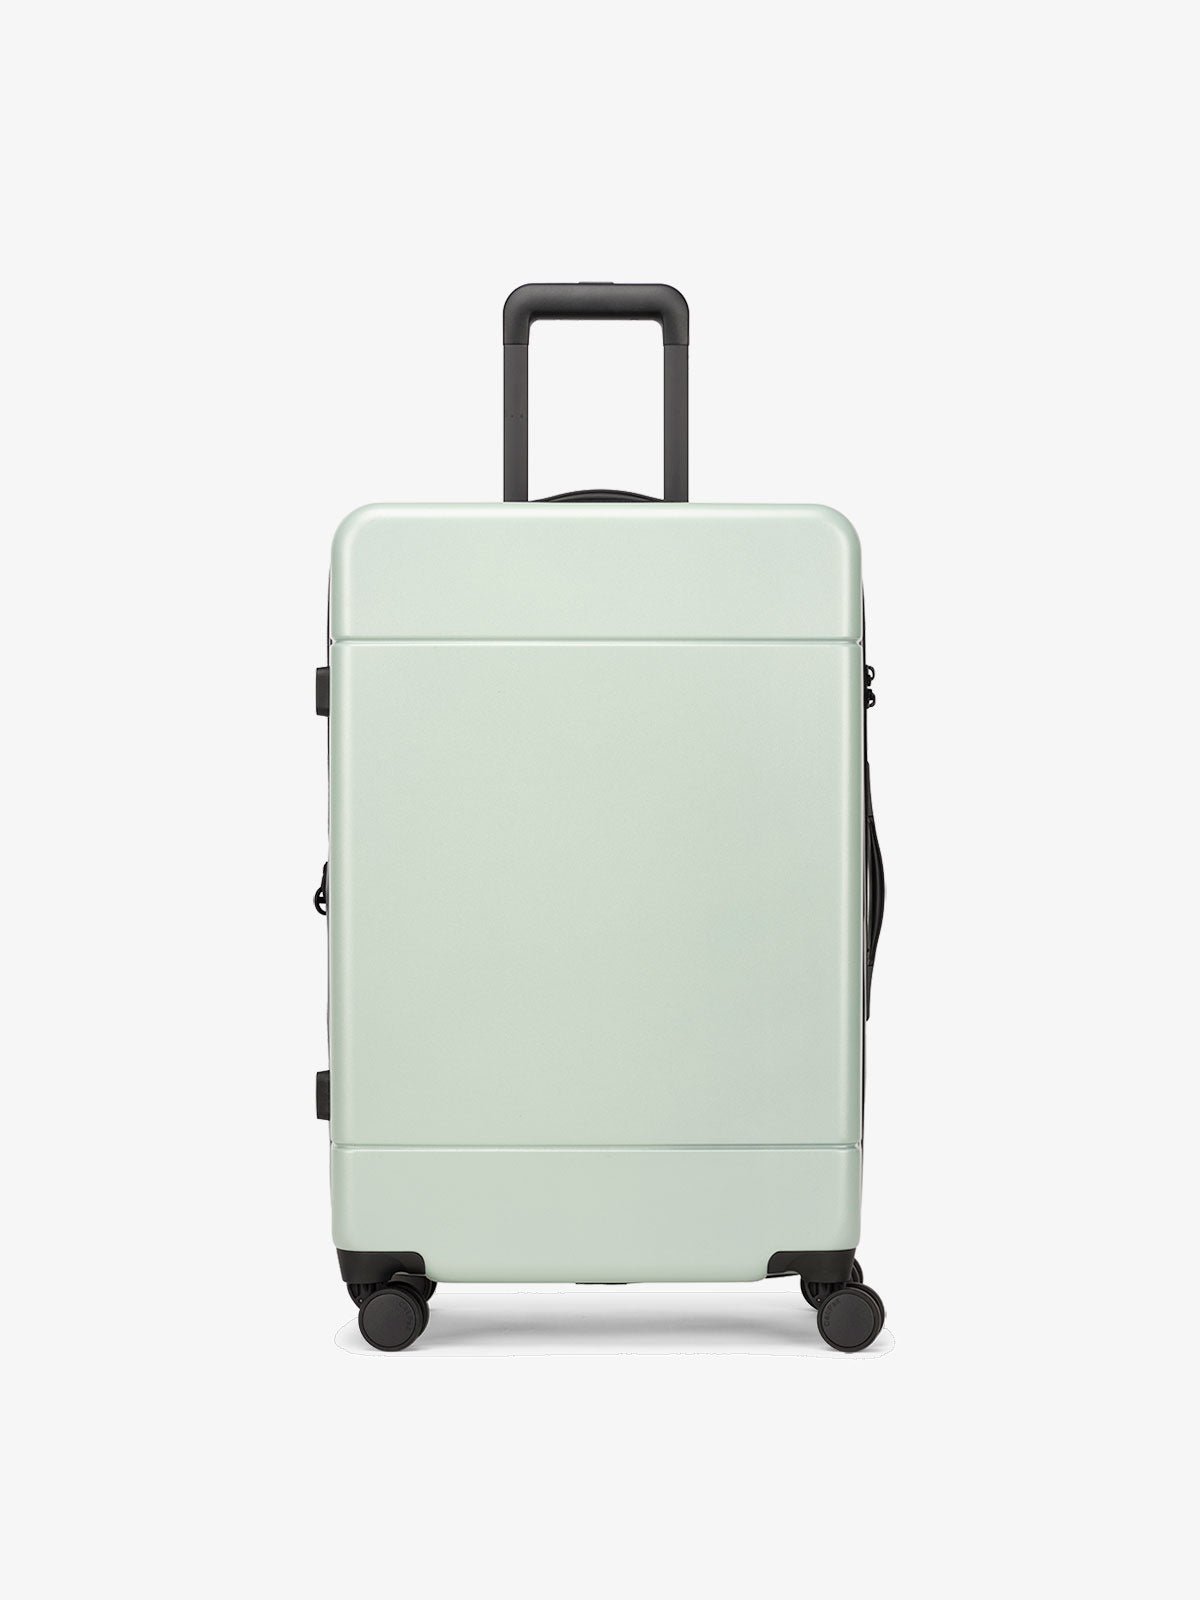 Hue medium hard side luggage in light green jade